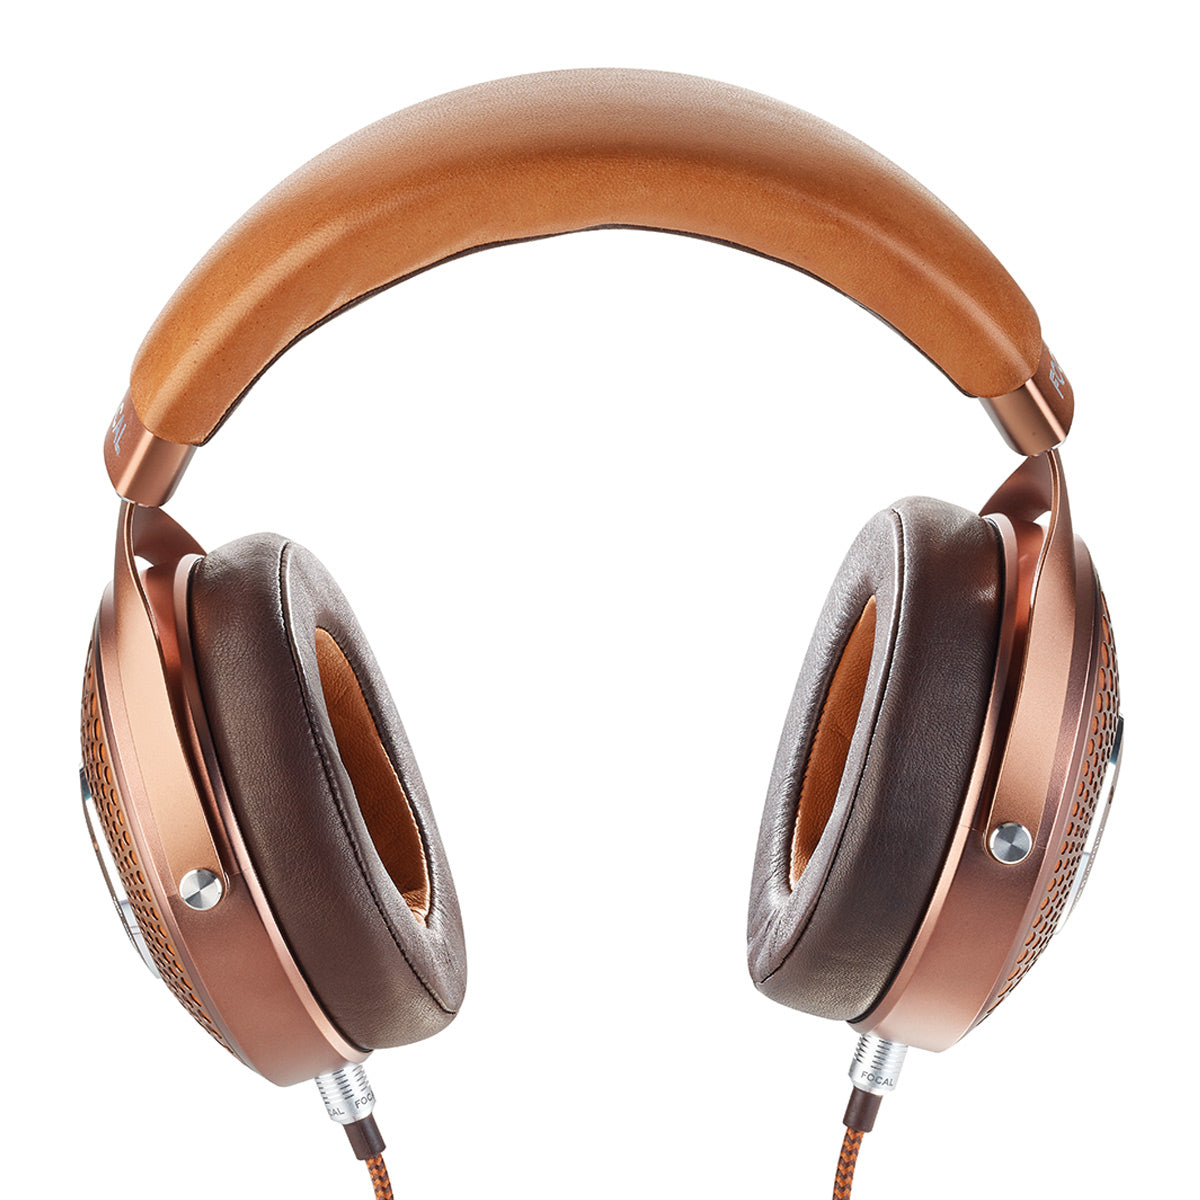 Focal Stellia Closed-Back Circum-Aural Over-Ear Headphones (Cognac)